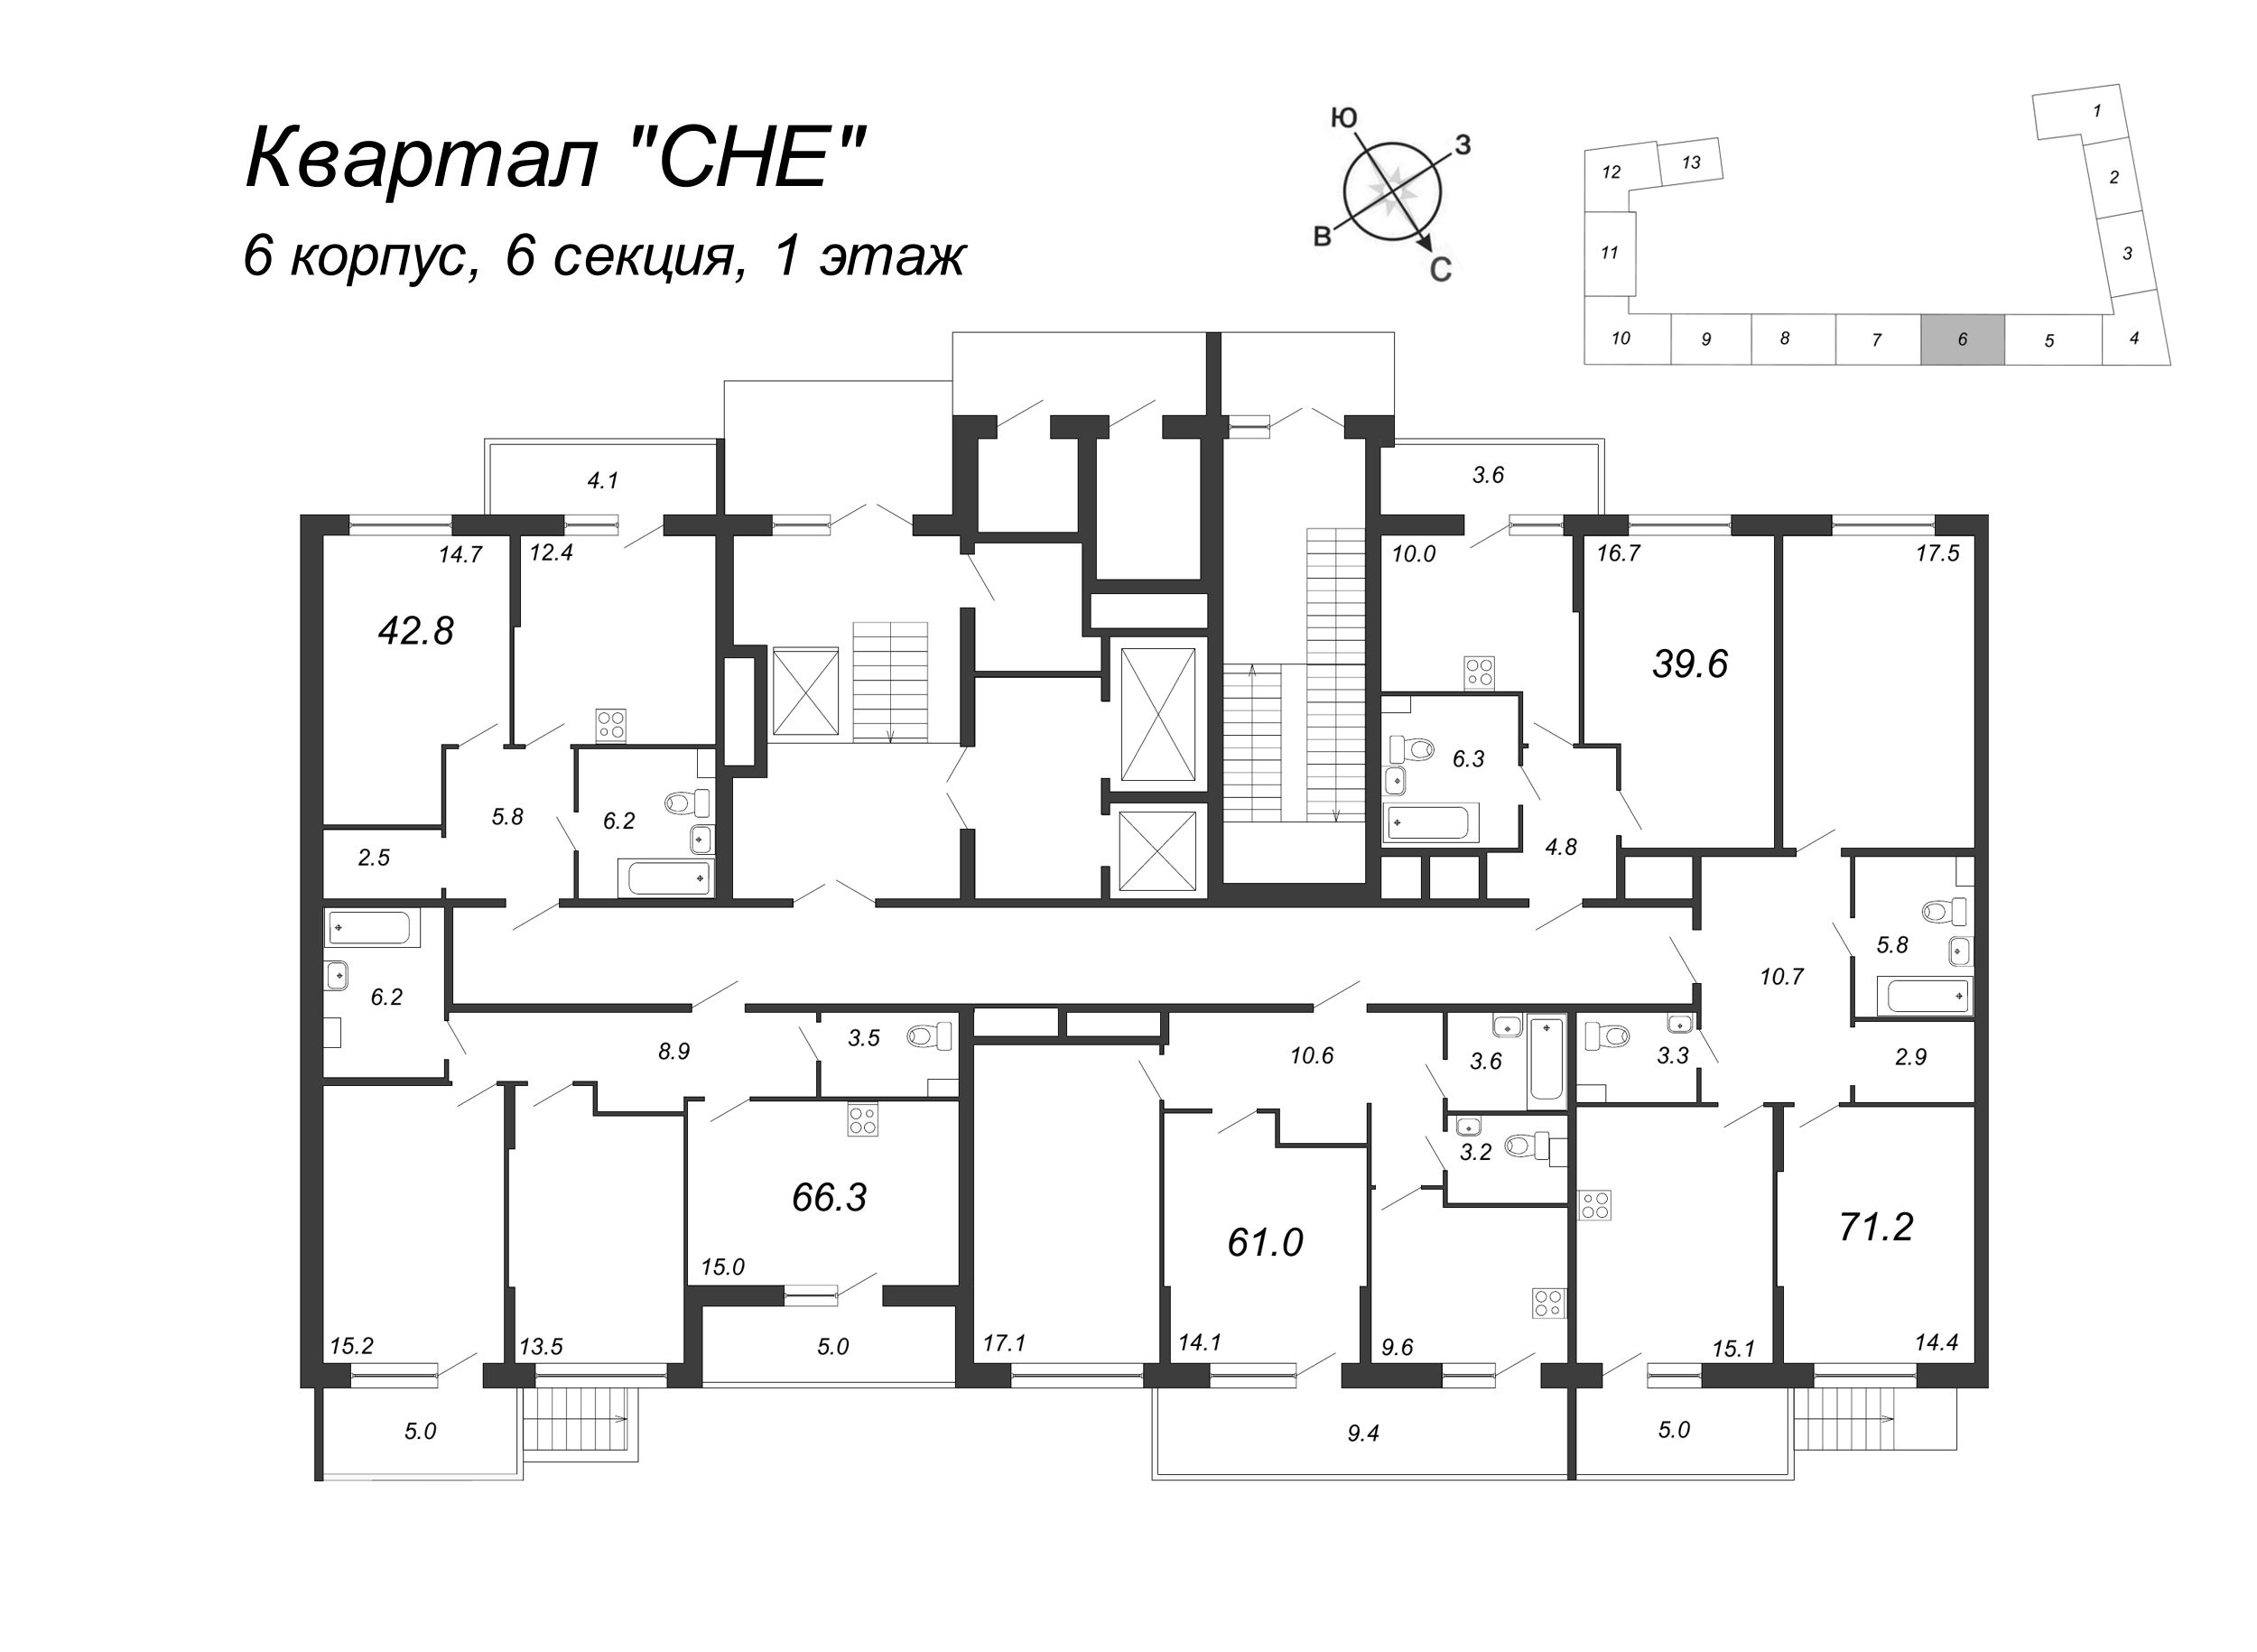 1-комнатная квартира, 43.1 м² в ЖК "Квартал Che" - планировка этажа